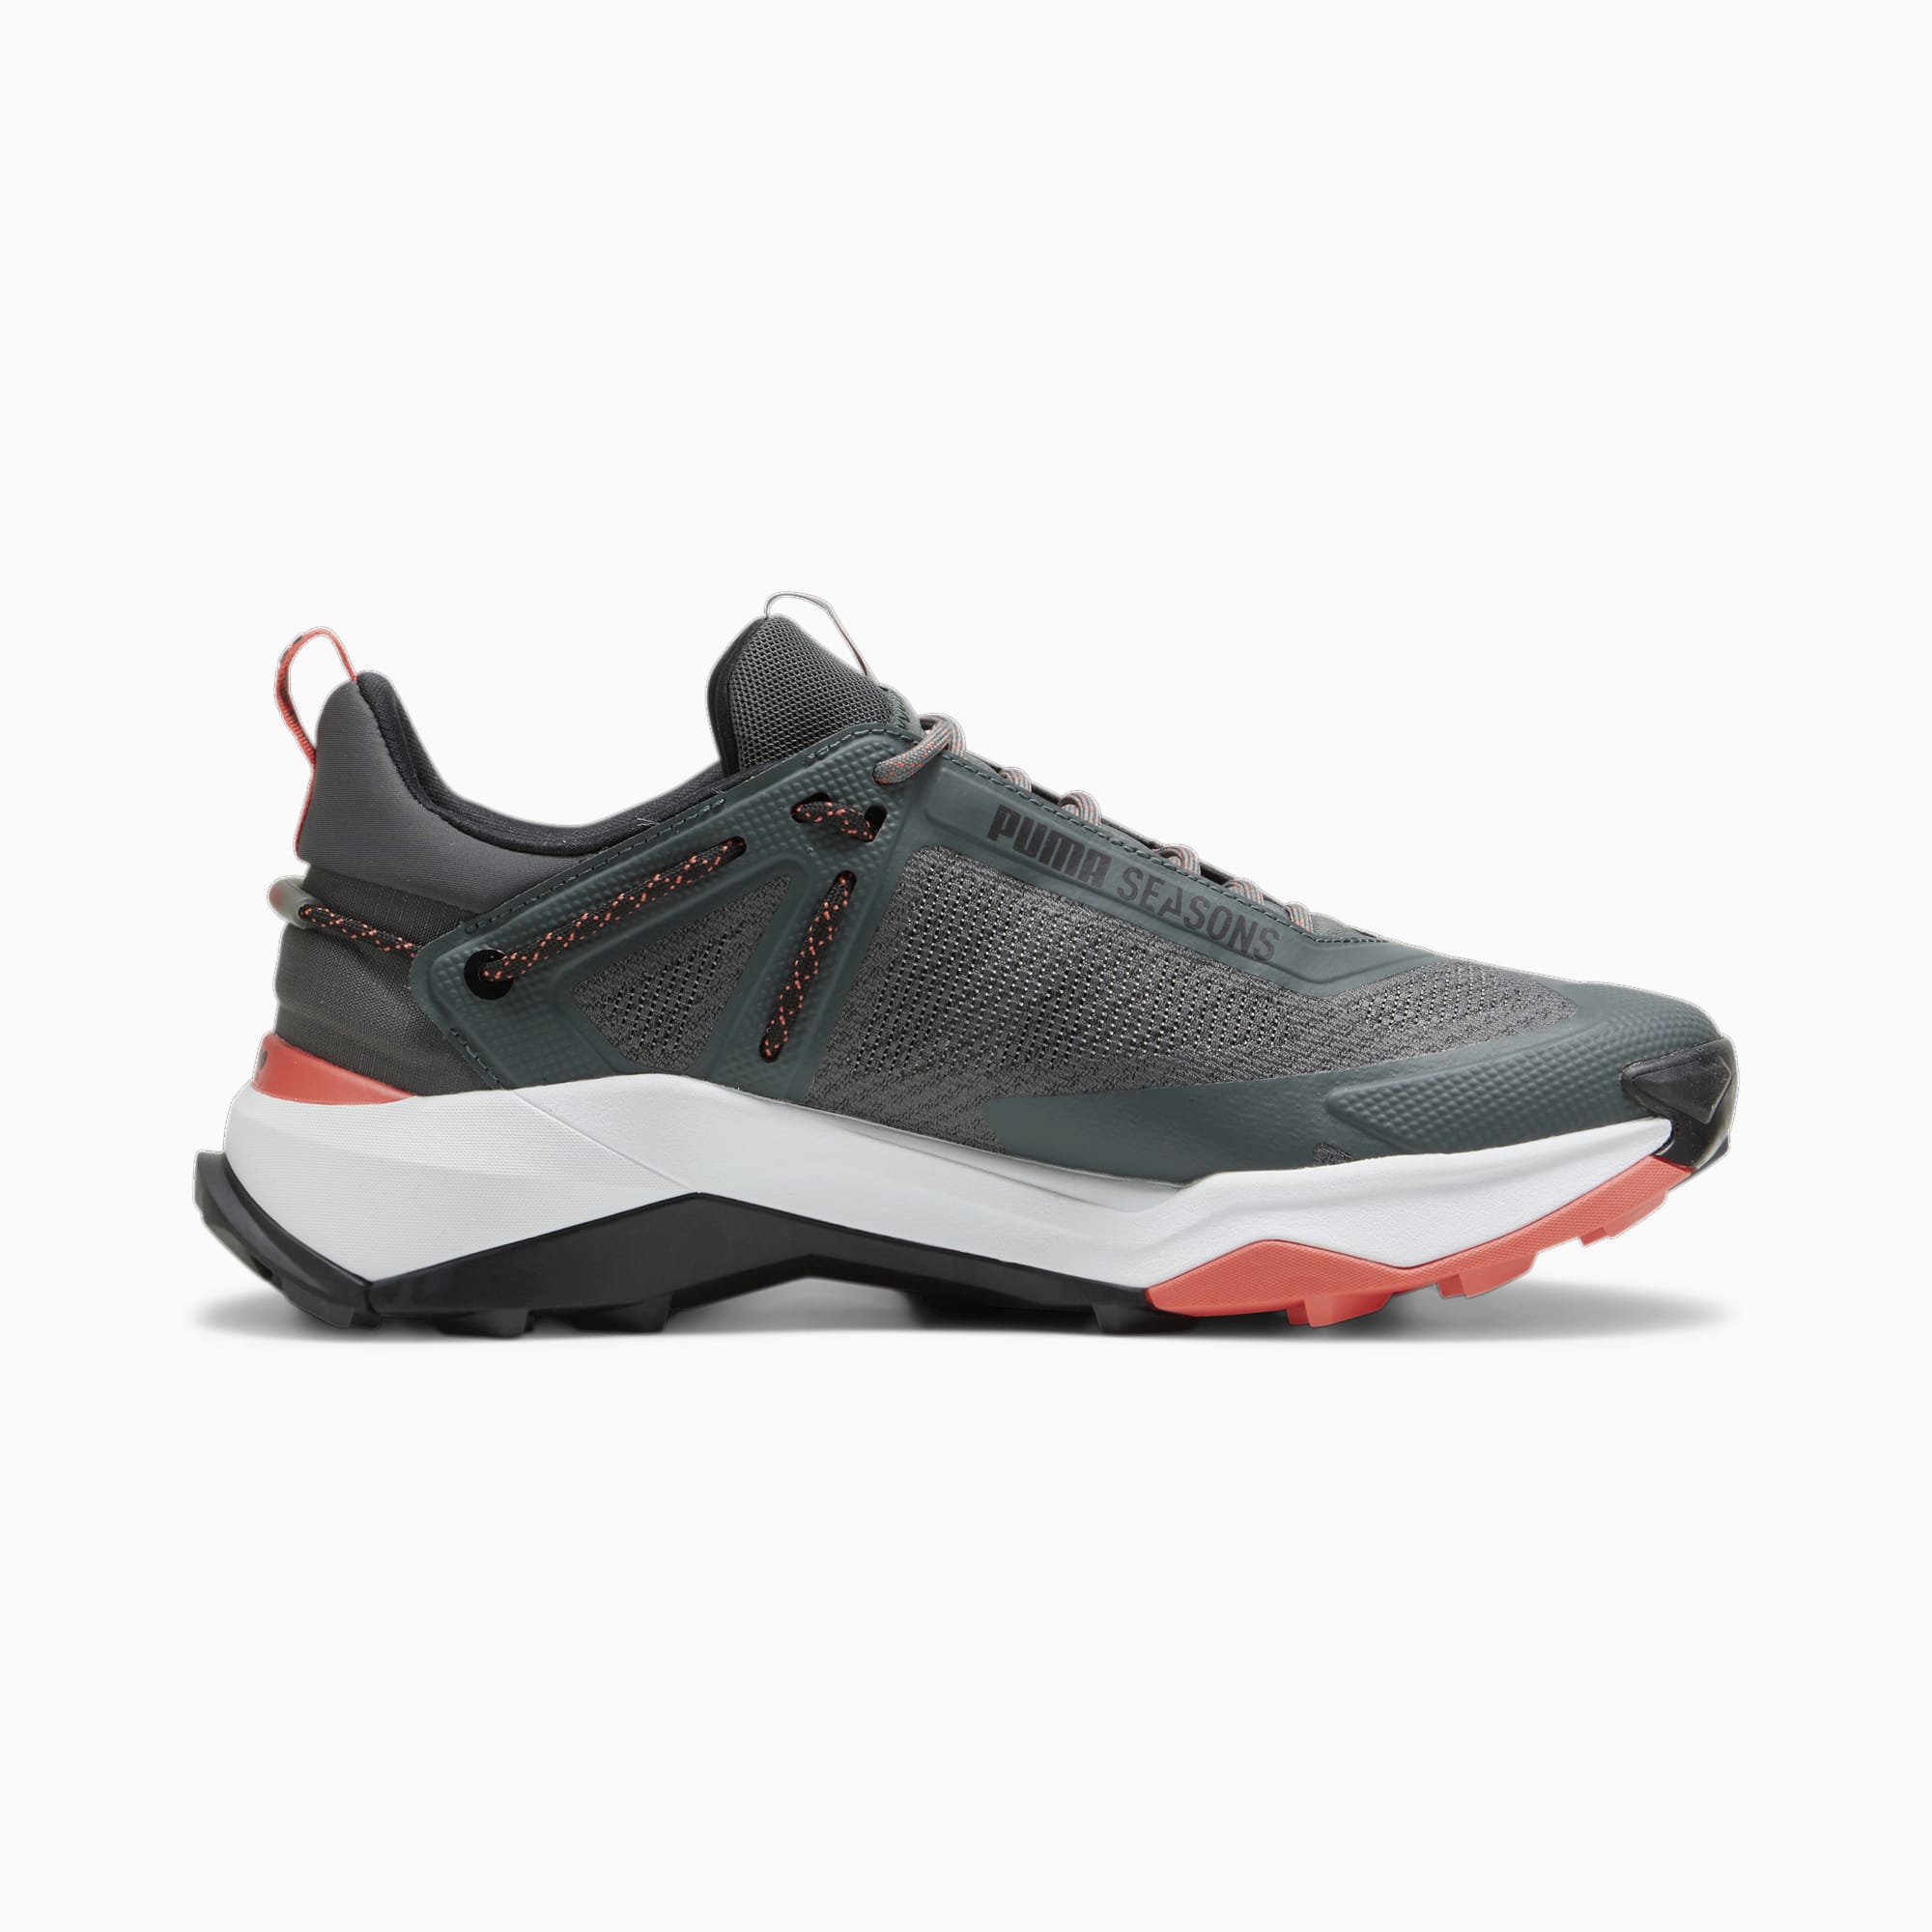 PUMA Explore Nitro™ Men's Hiking Shoe Sneakers, Mineral Grey/Black/Active Red